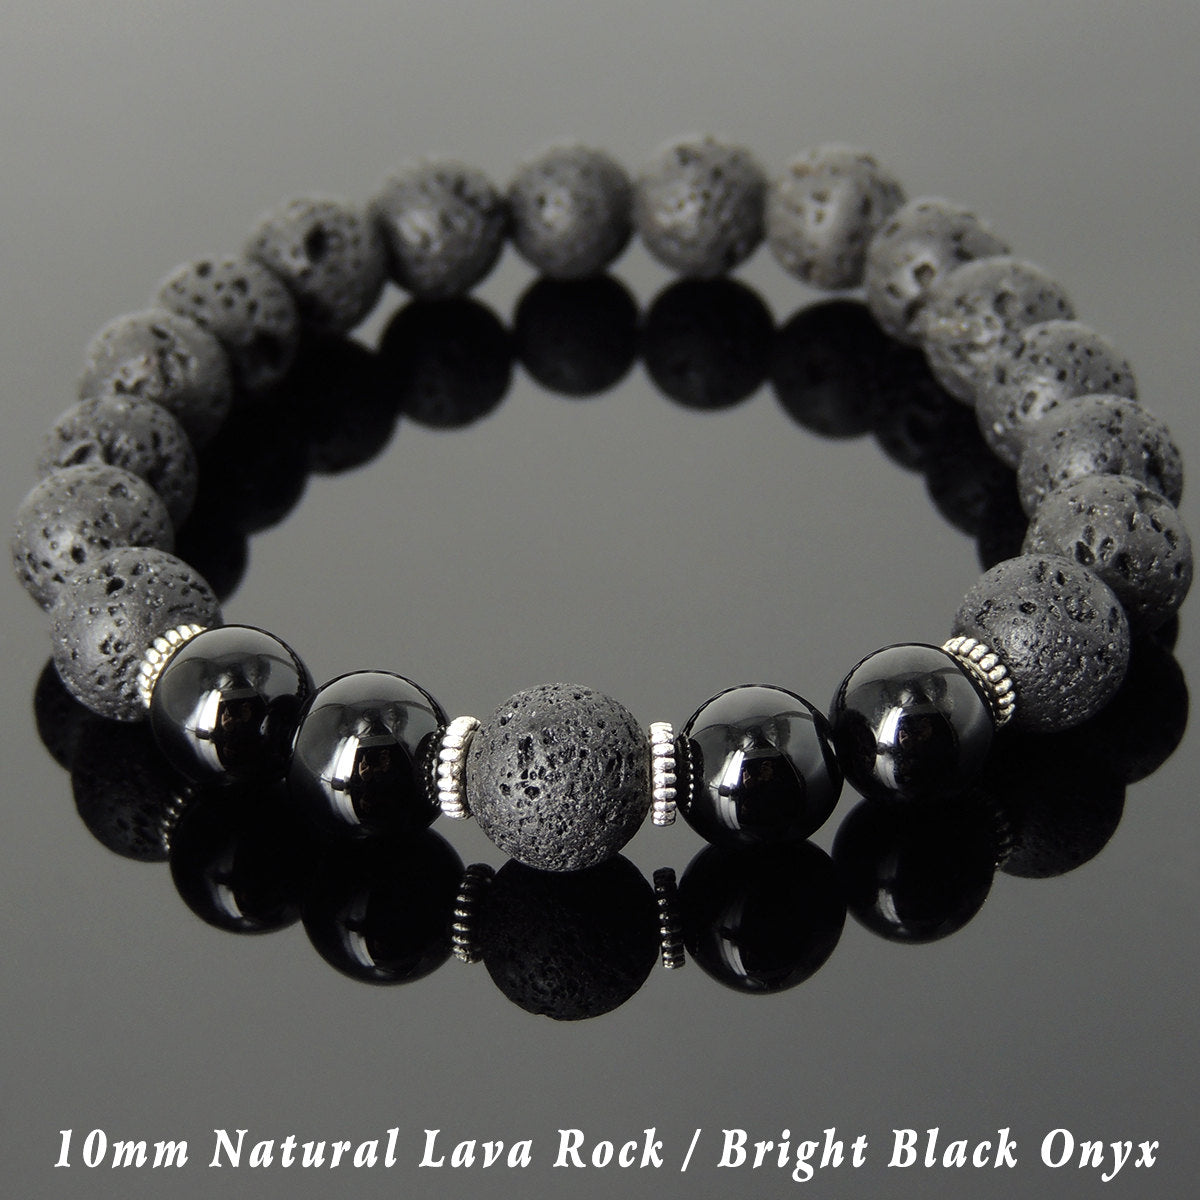 10mm Bright Black Onyx & Lava Rock Healing Stone Bracelet with Tibetan Silver Spacers - Handmade by Gem & Silver TSB282